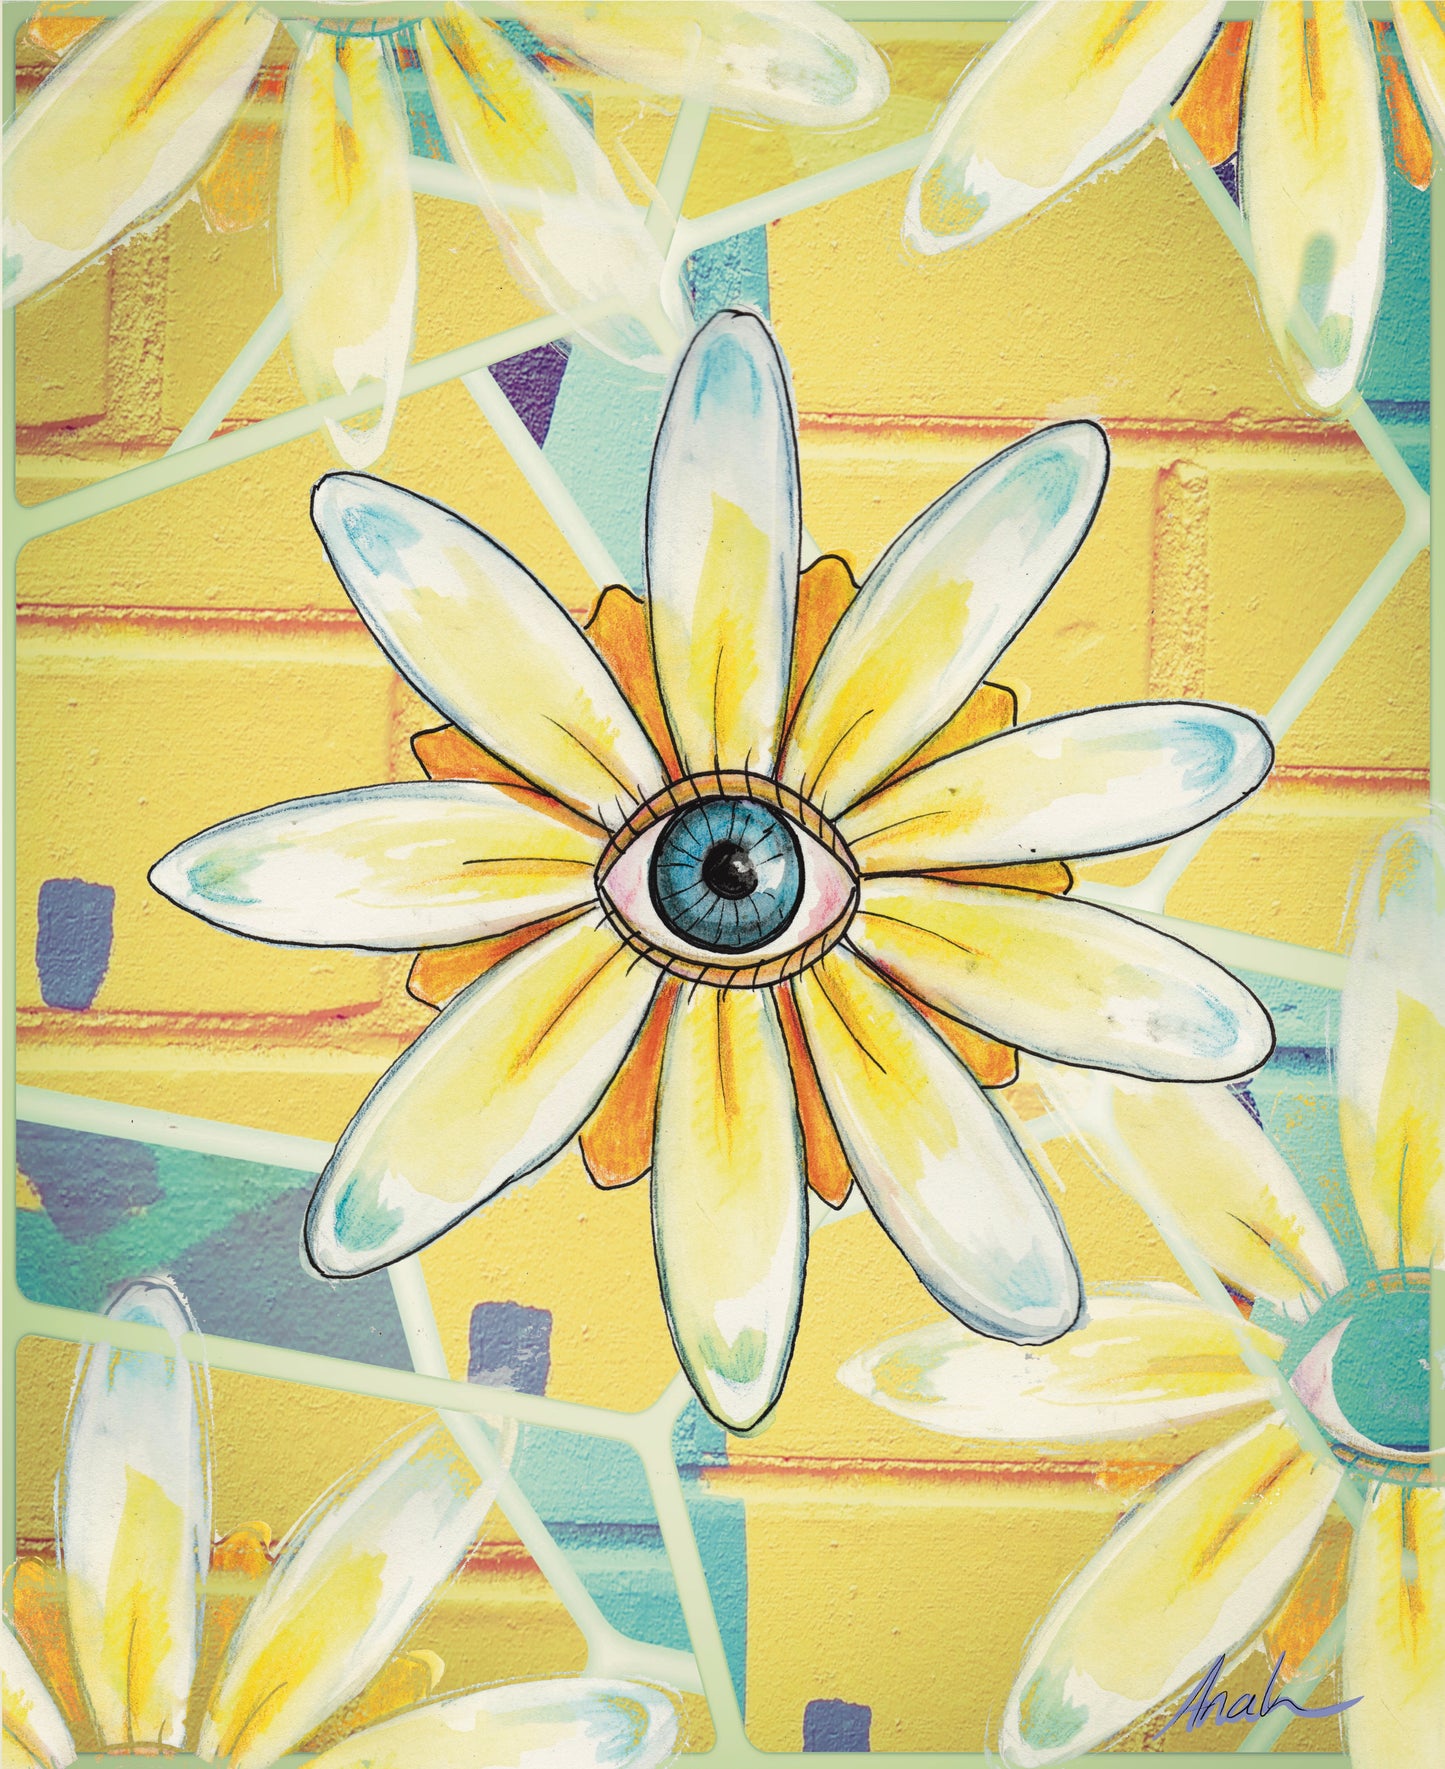 Eye Flower with Graffiti